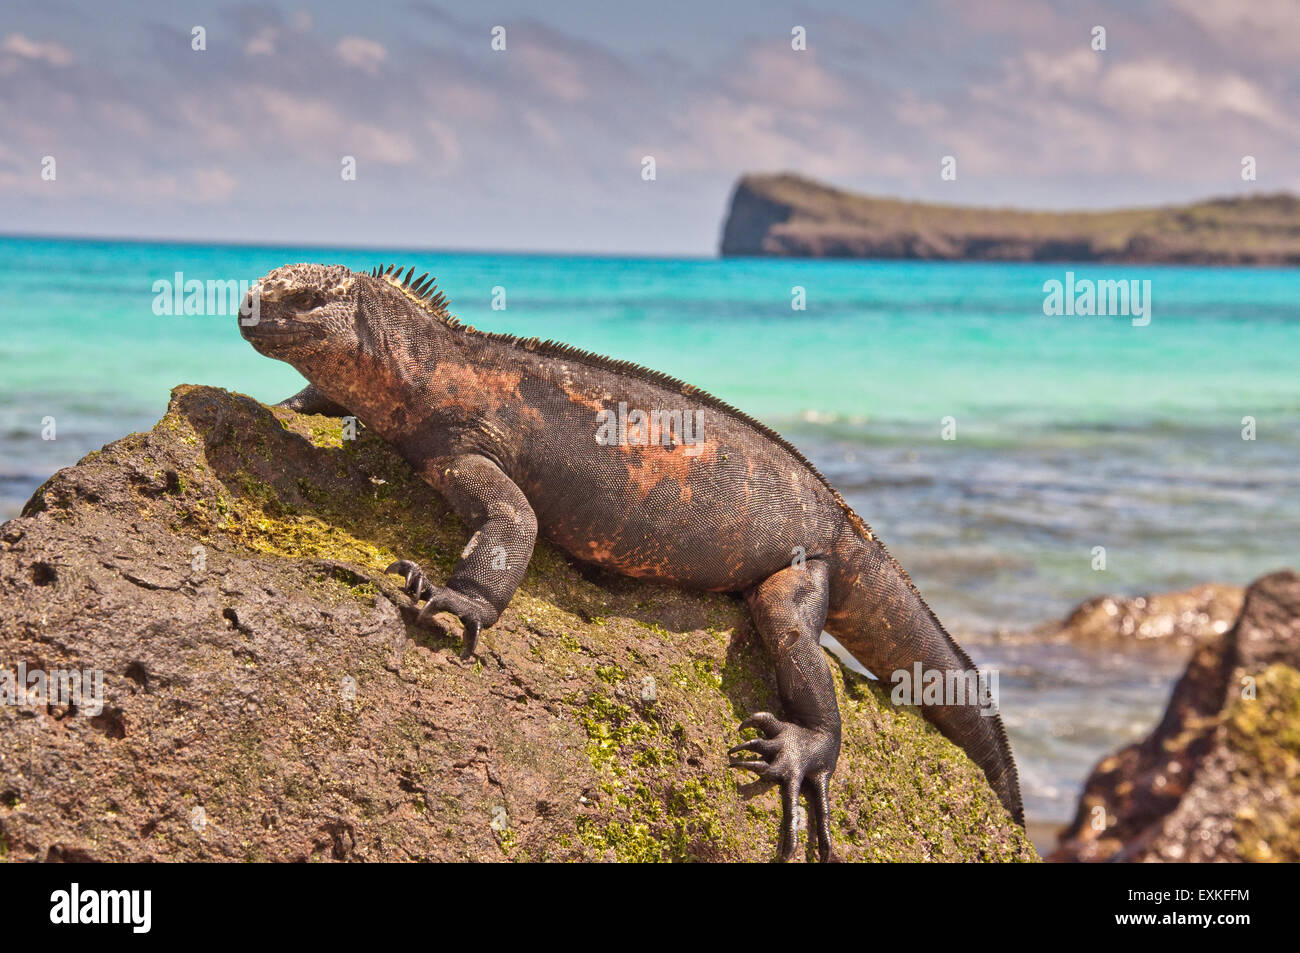 Marine iguana (Amblyrhynchus cristatus) on lava rock in the Galapagos Islands with blue sea behind Stock Photo